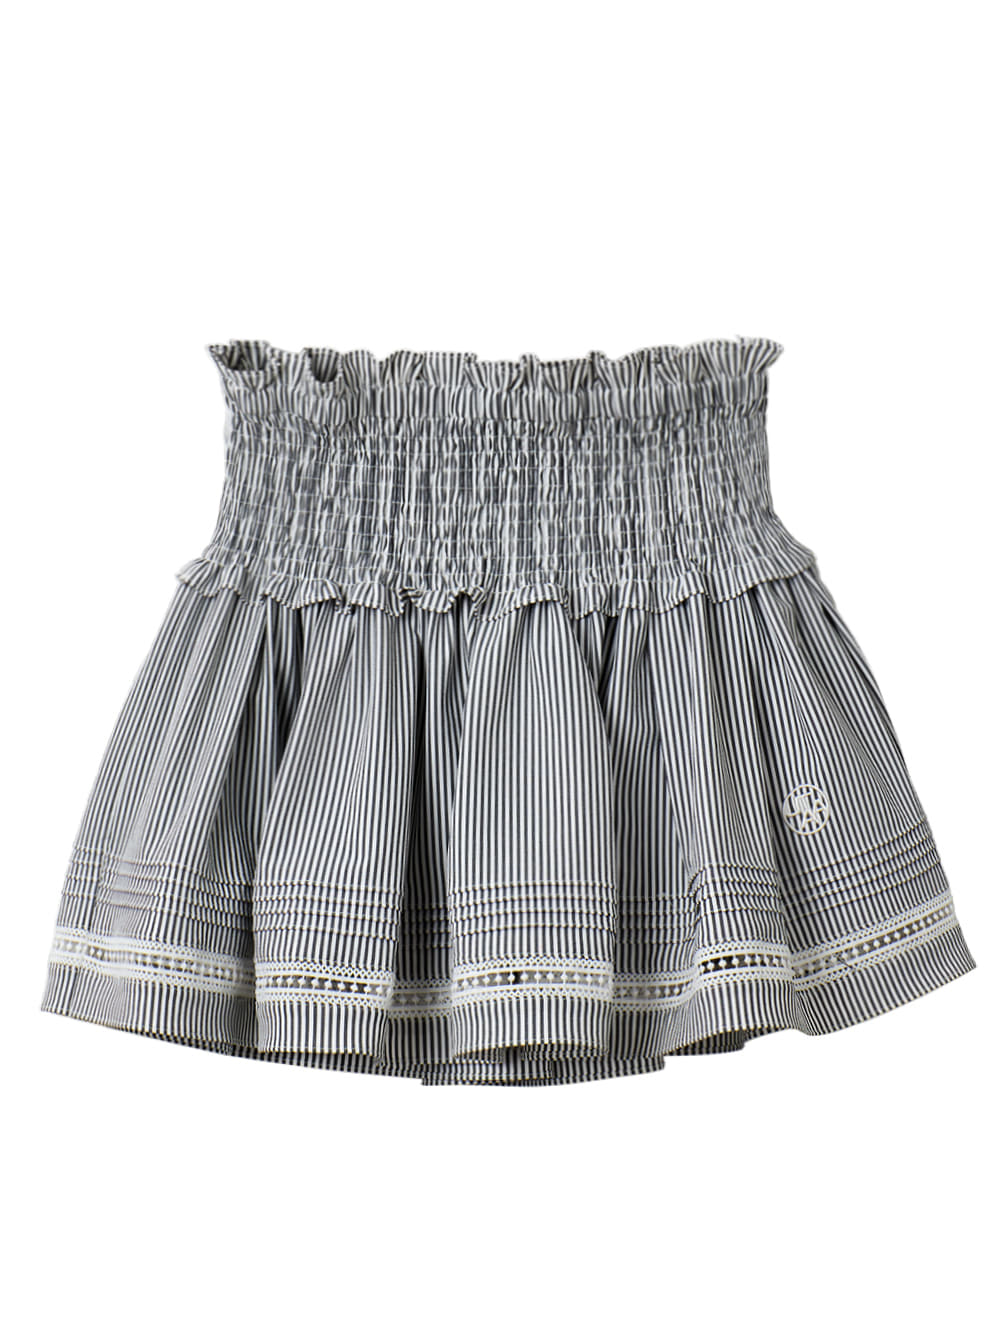 UTAA Lace Stripe Shirring Skirt : Grey (UB3SSF407GR)